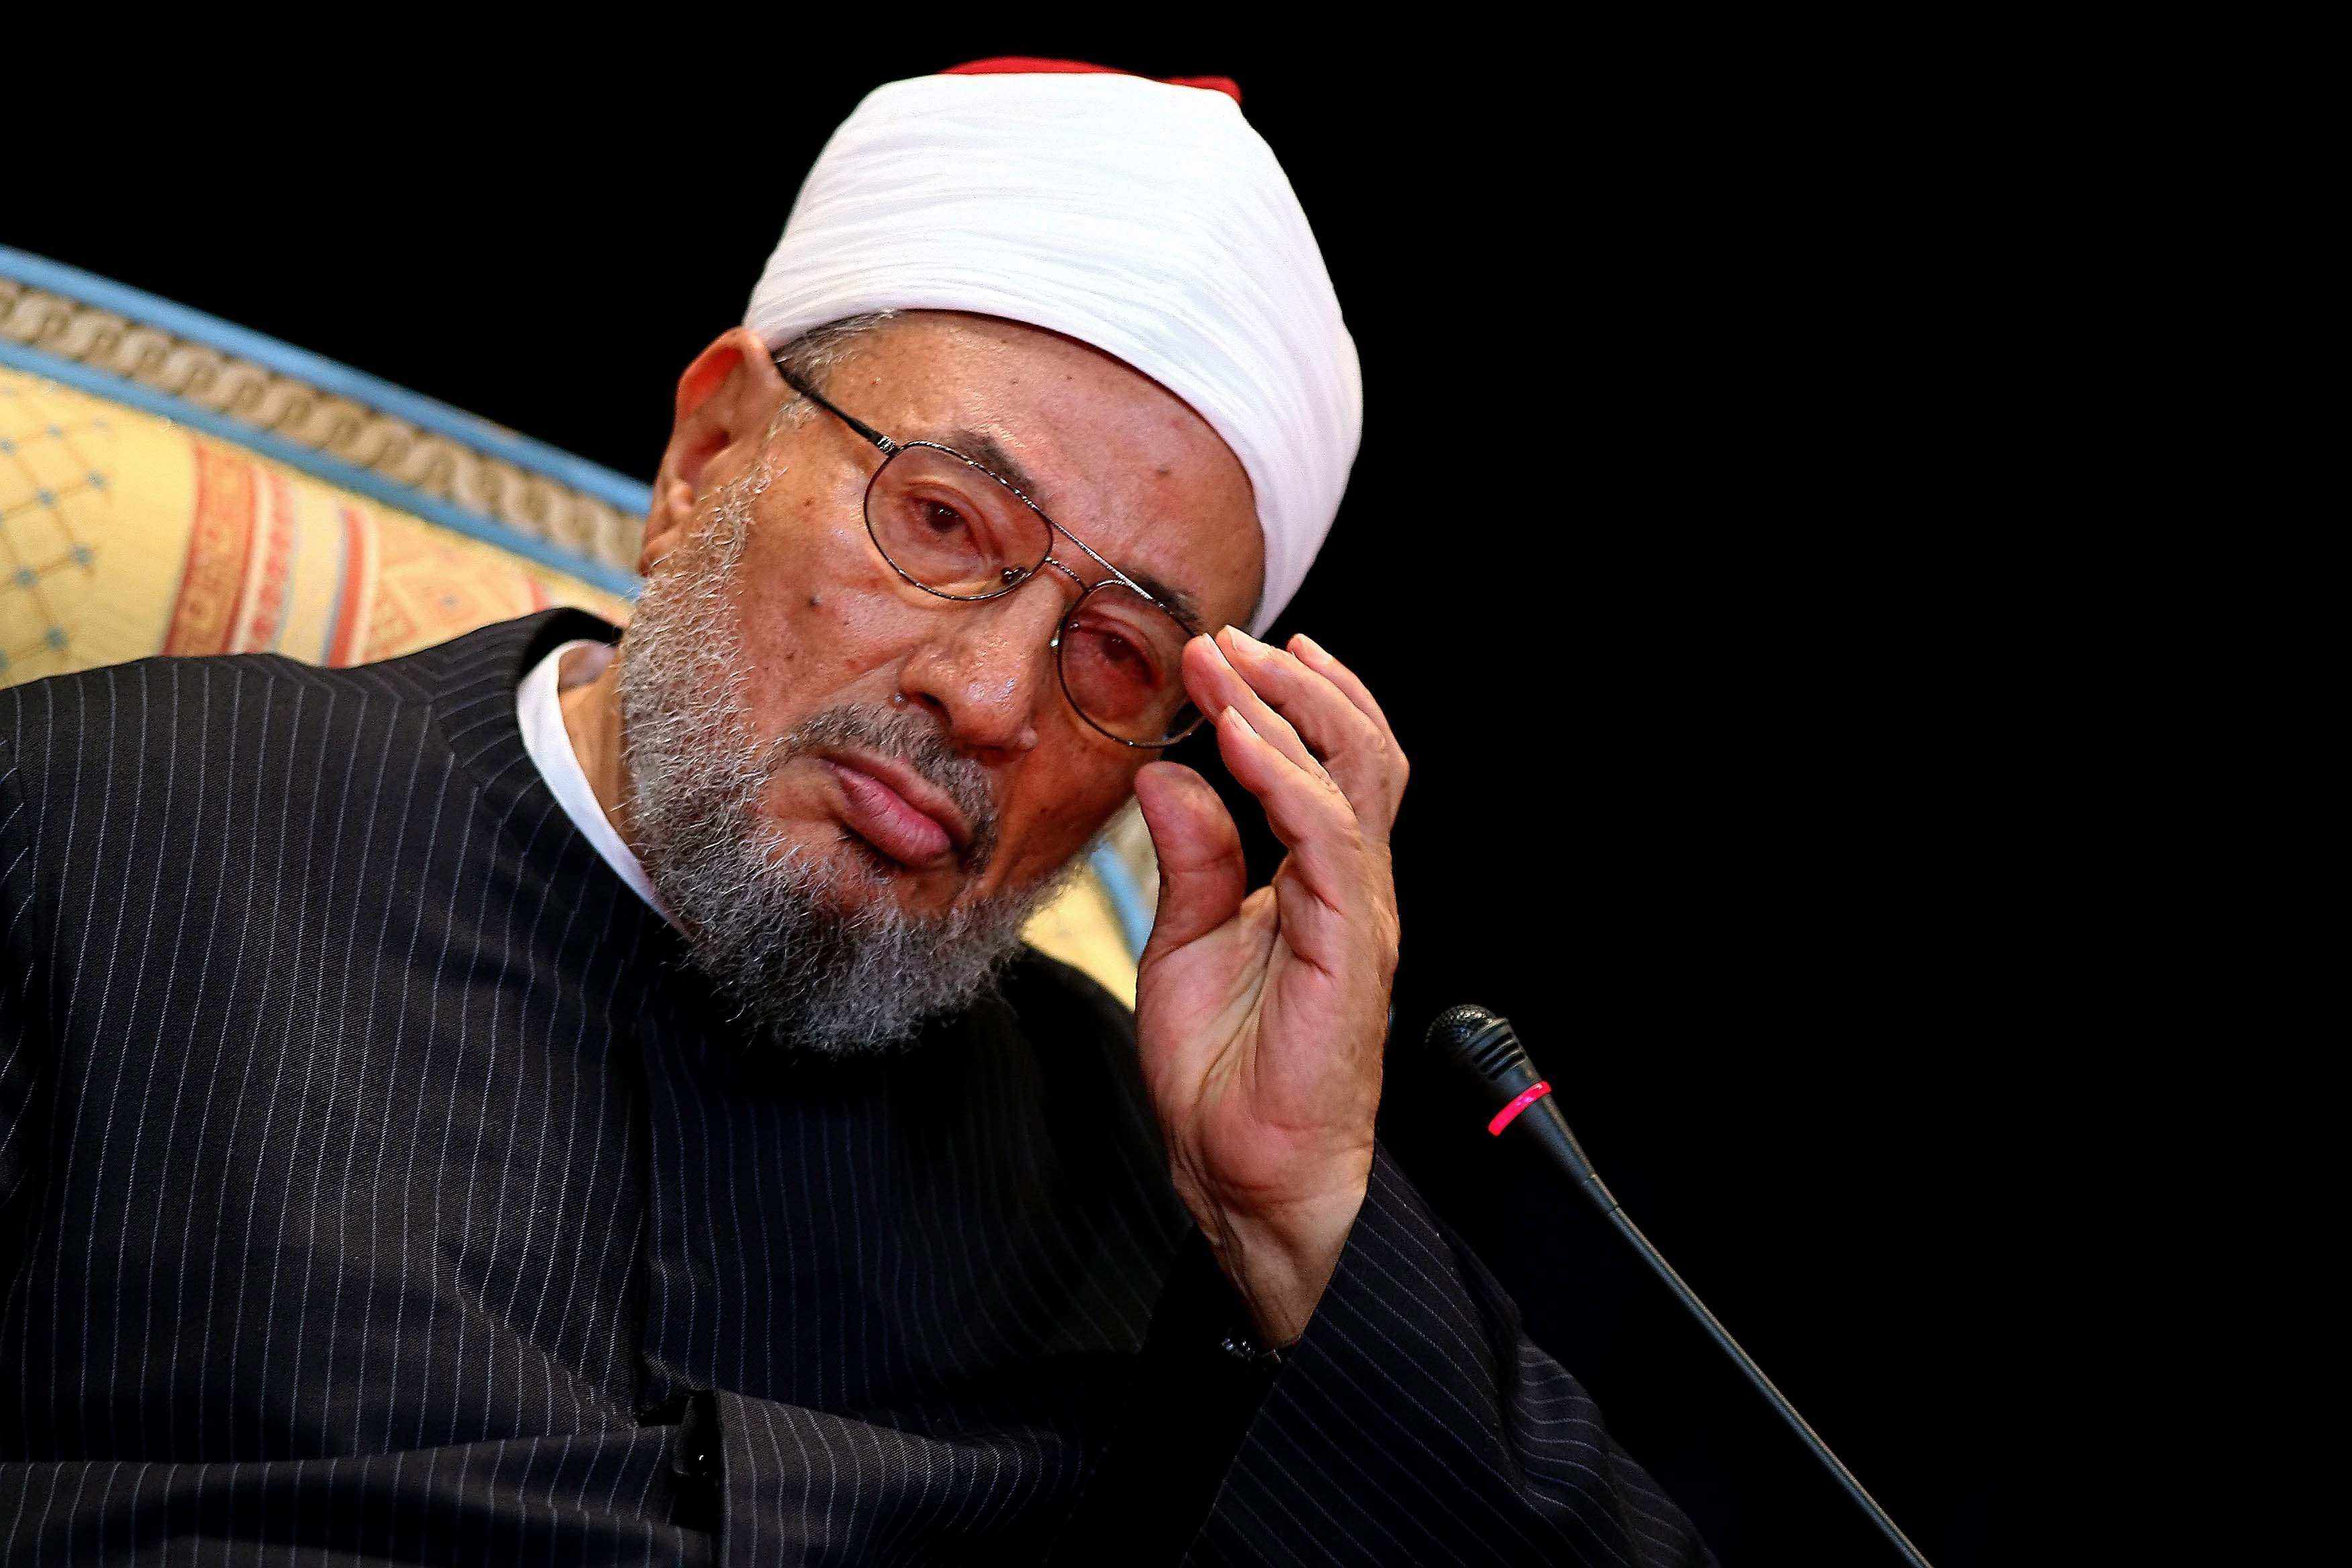 Yoused al-Qaradawi